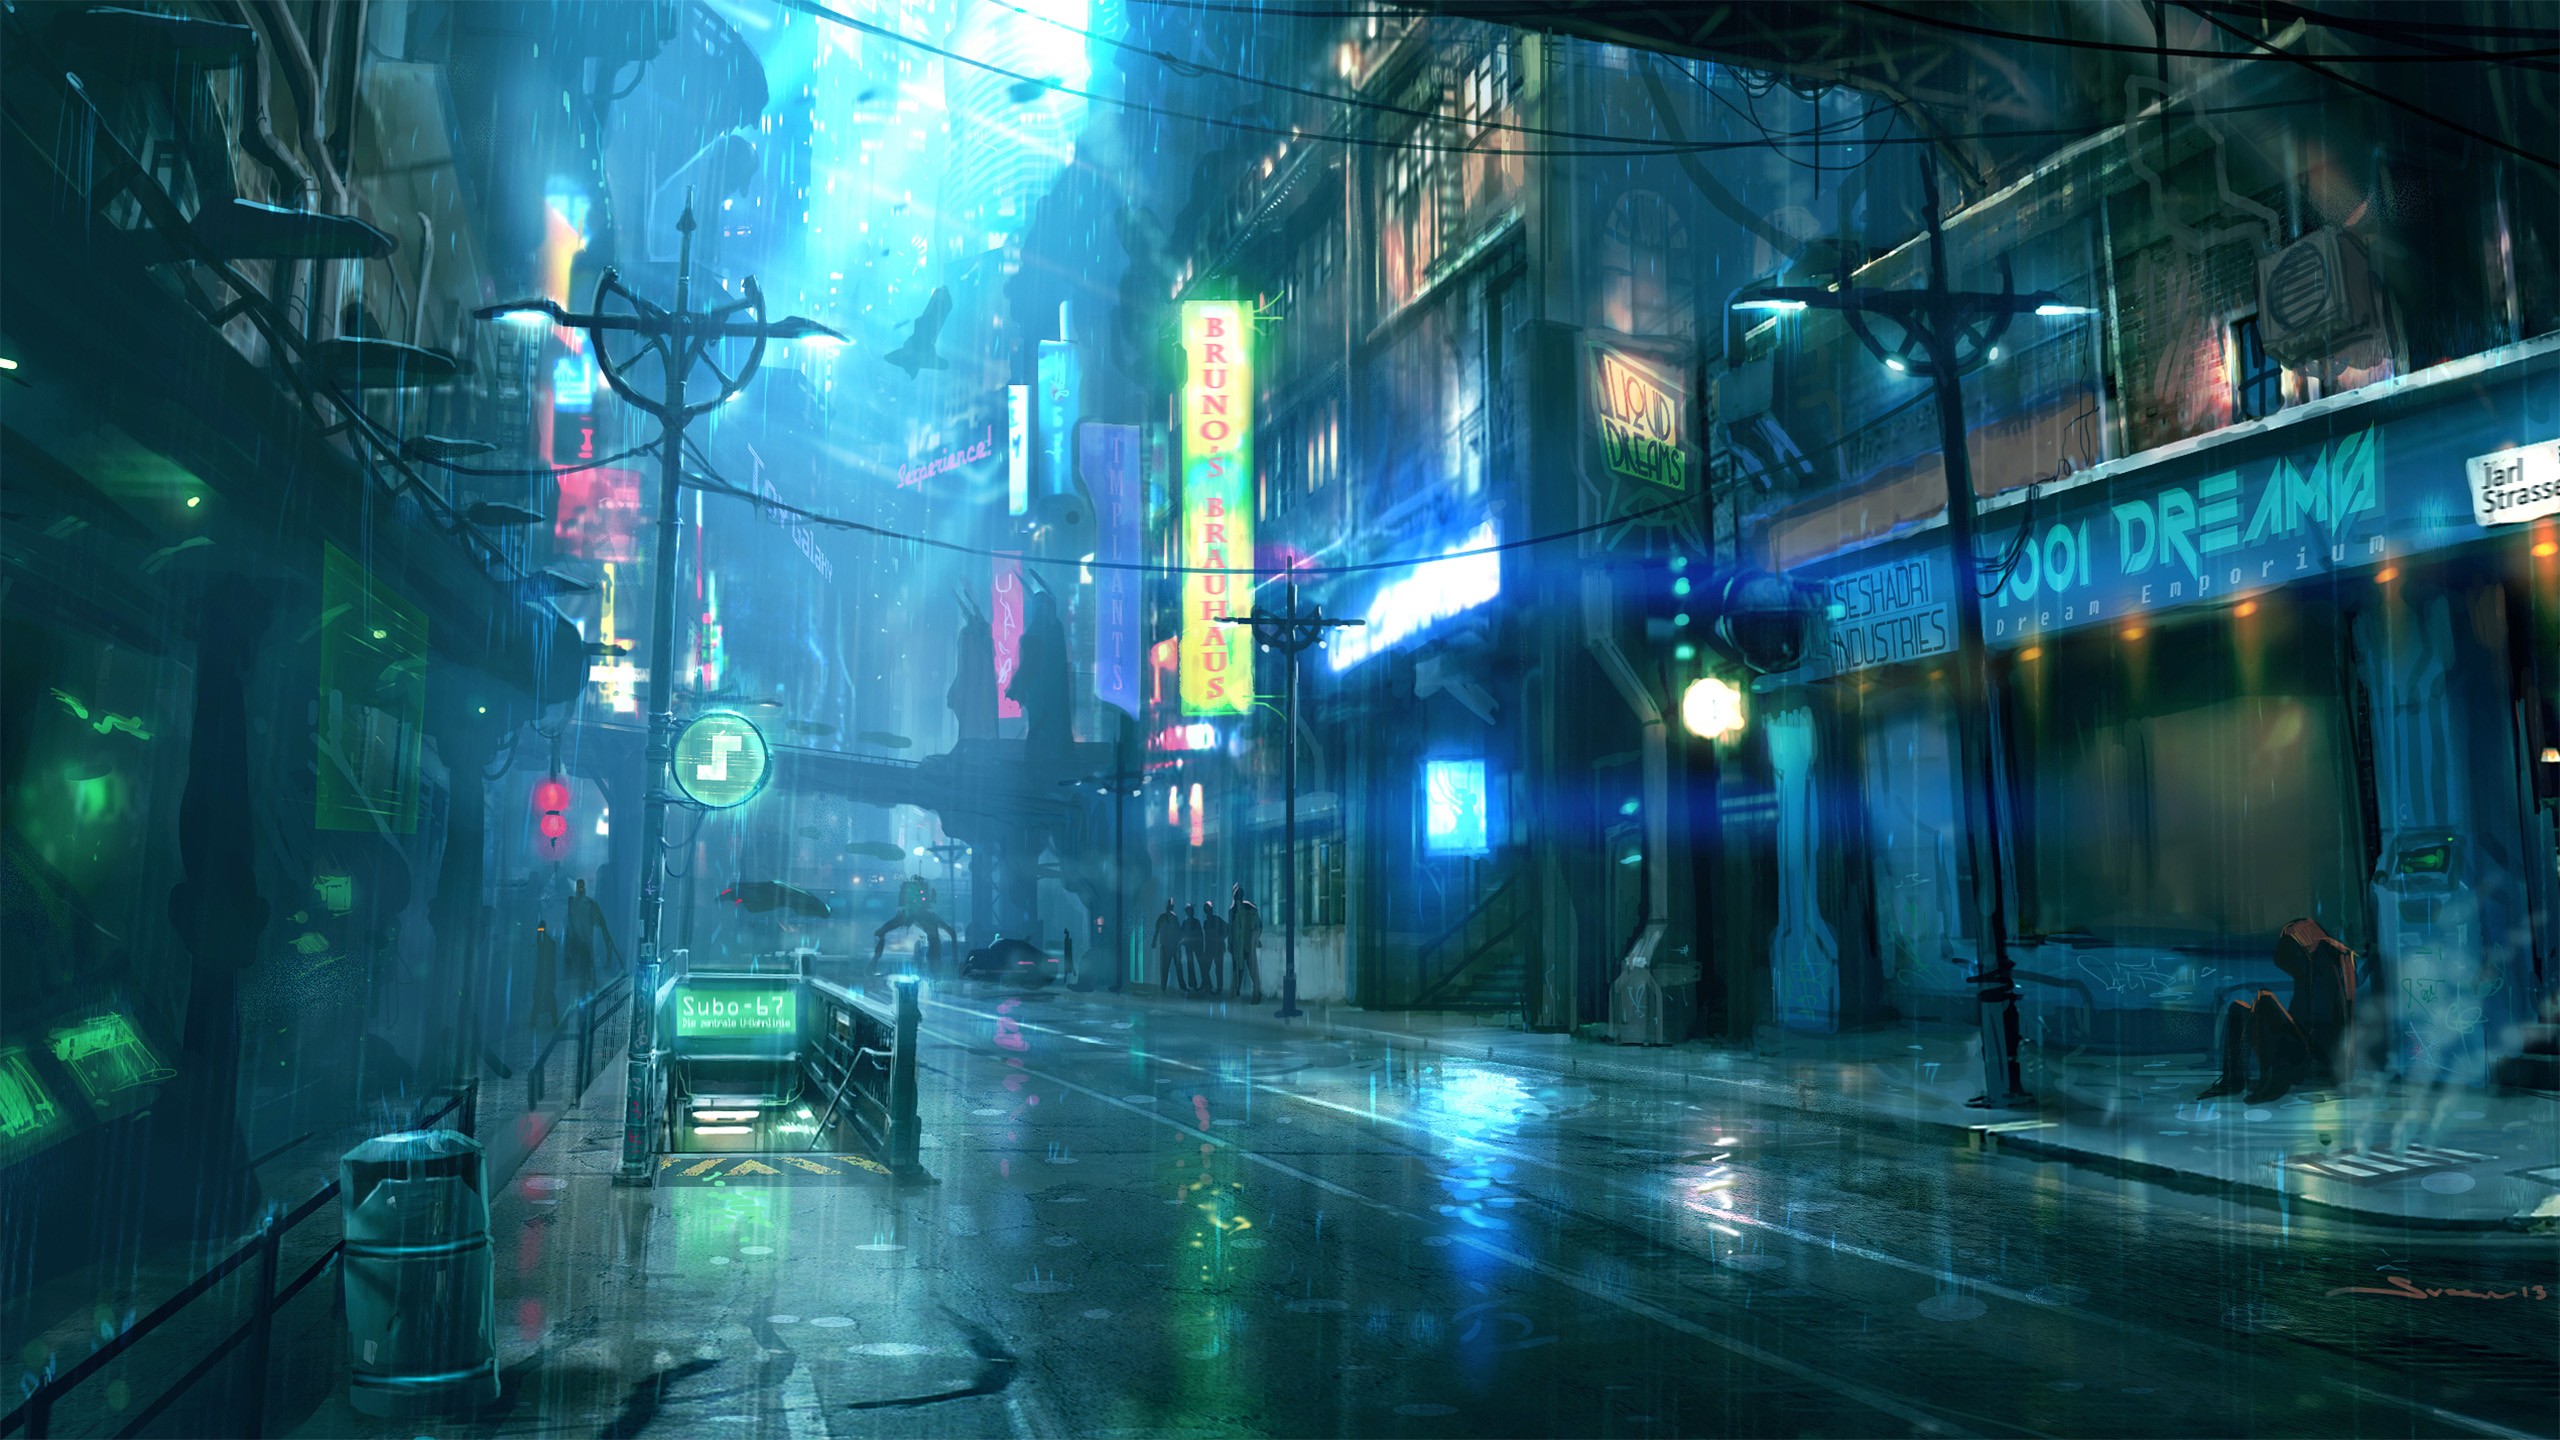 General 2560x1440 rain cyberpunk artwork night street Dreamfall Chapters science fiction neon digital art cityscape futuristic city cyan